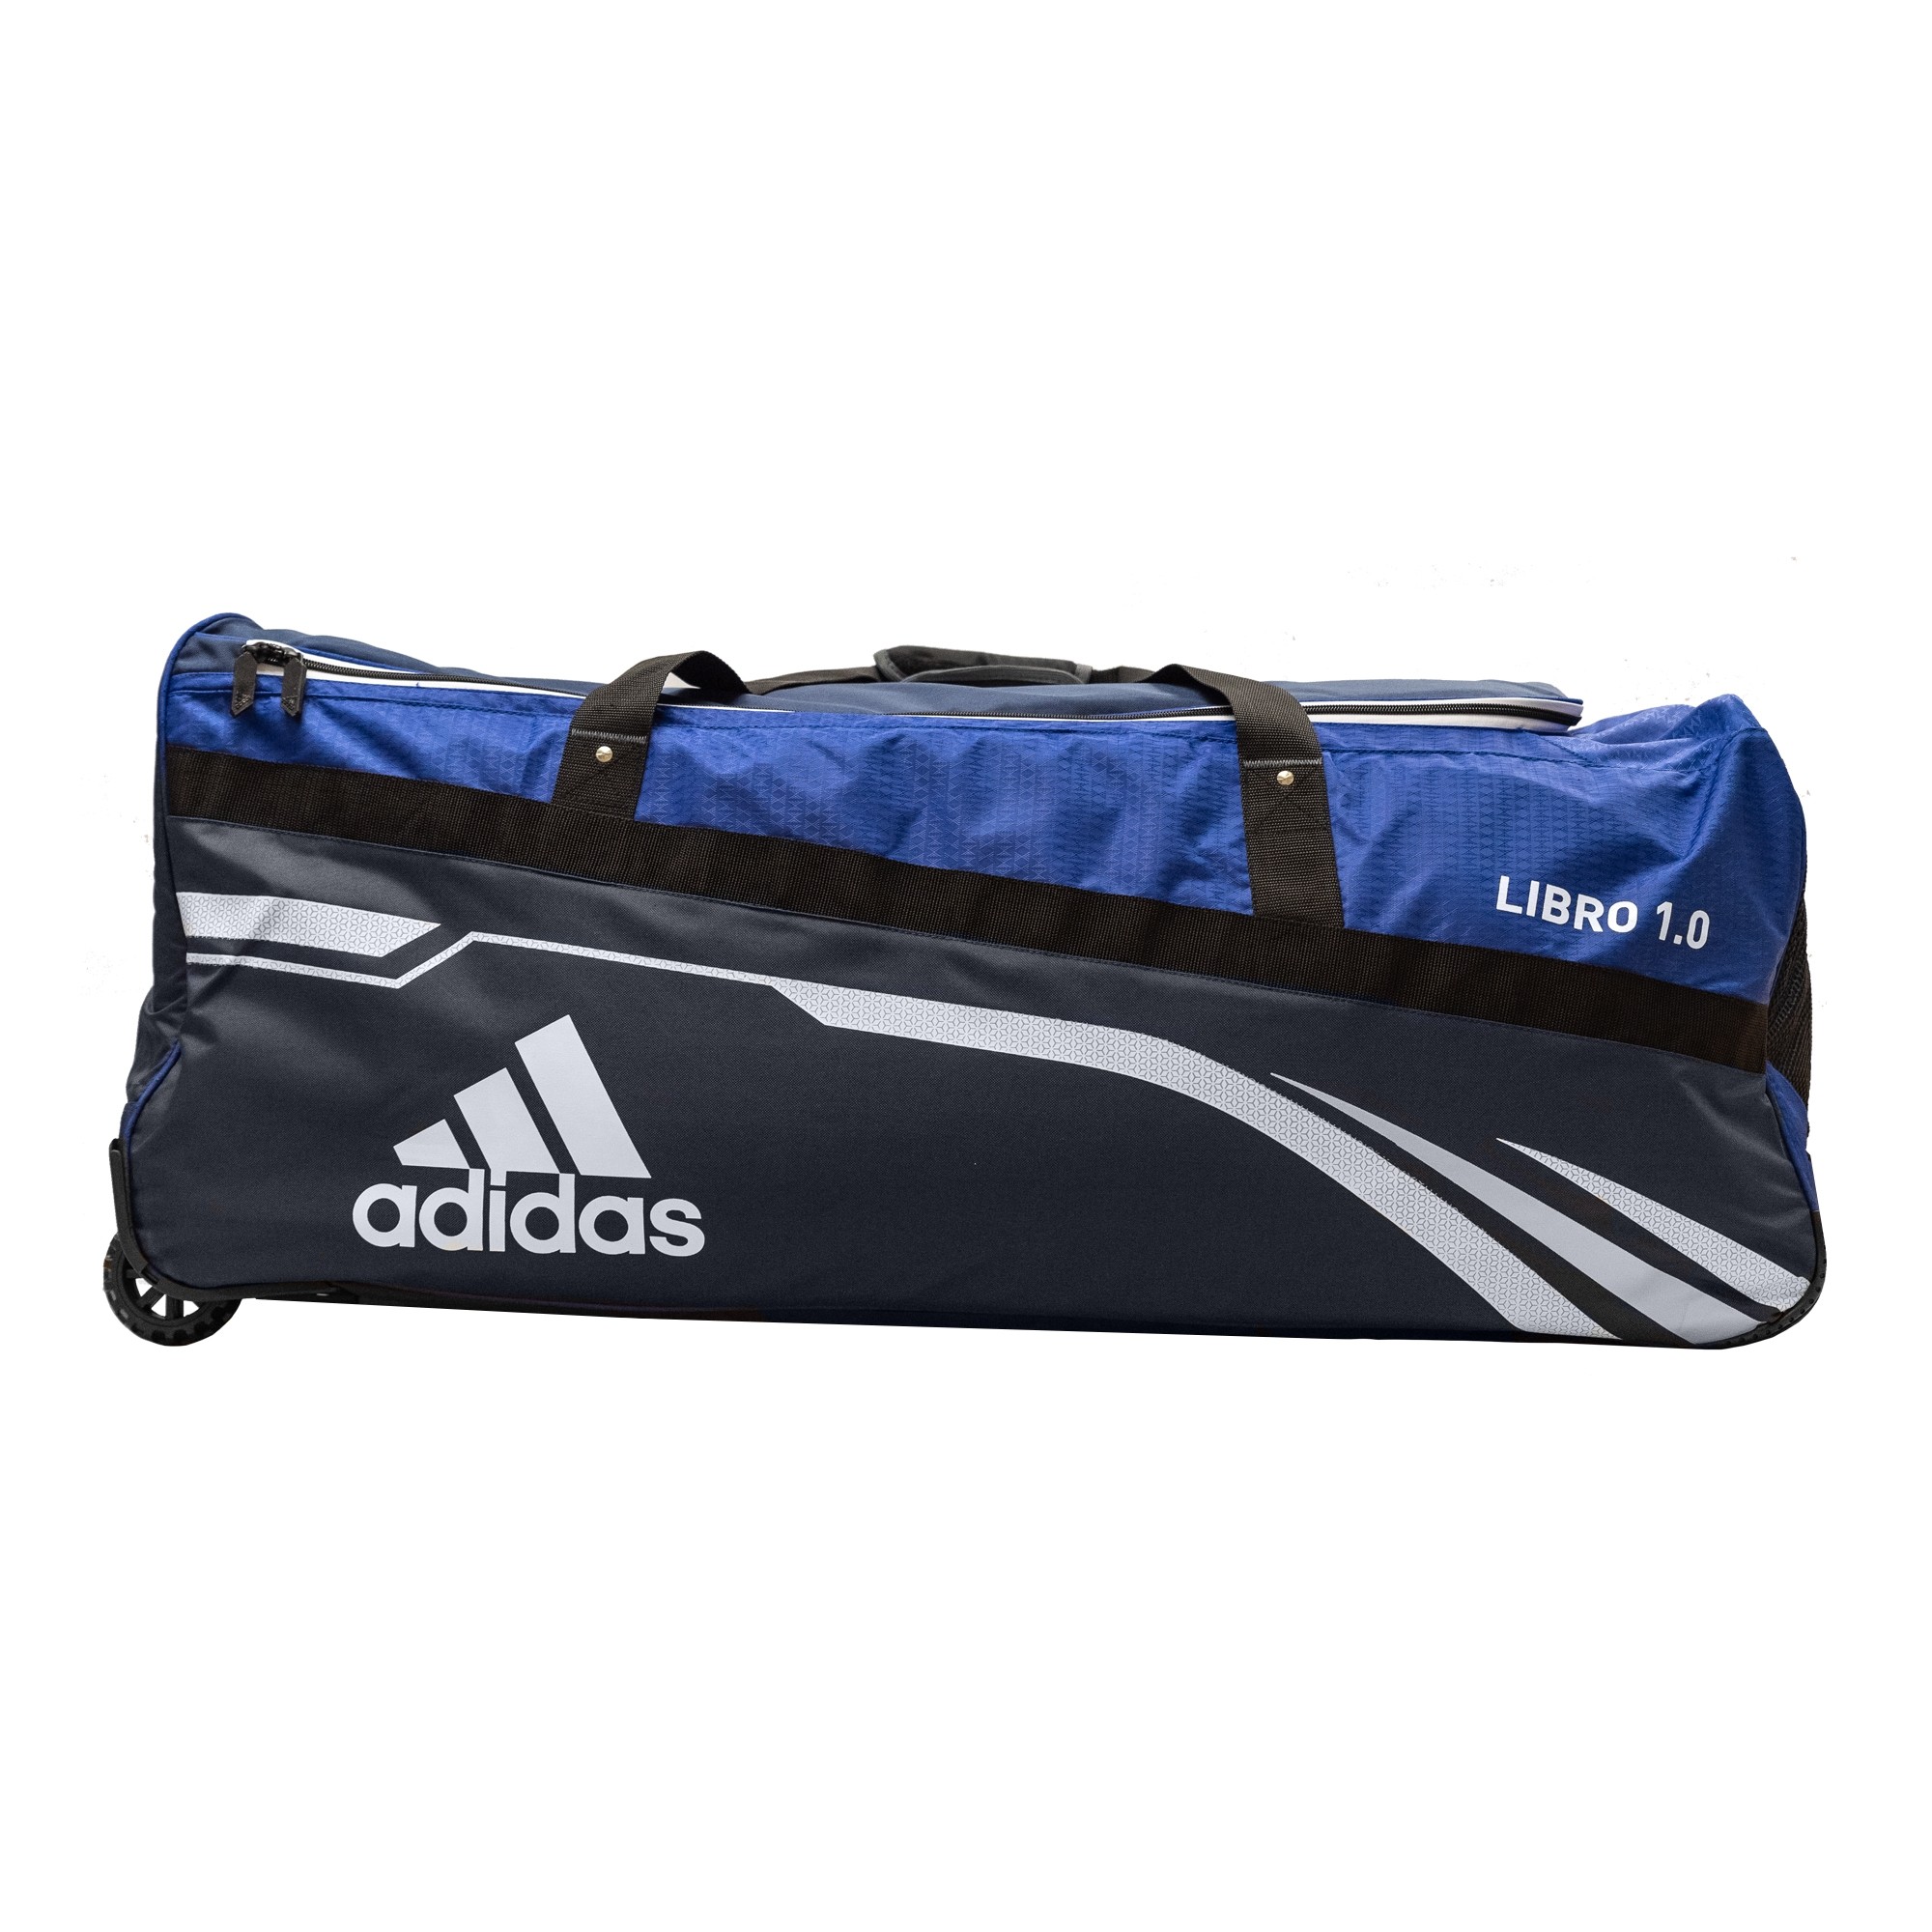 adidas cricket kit